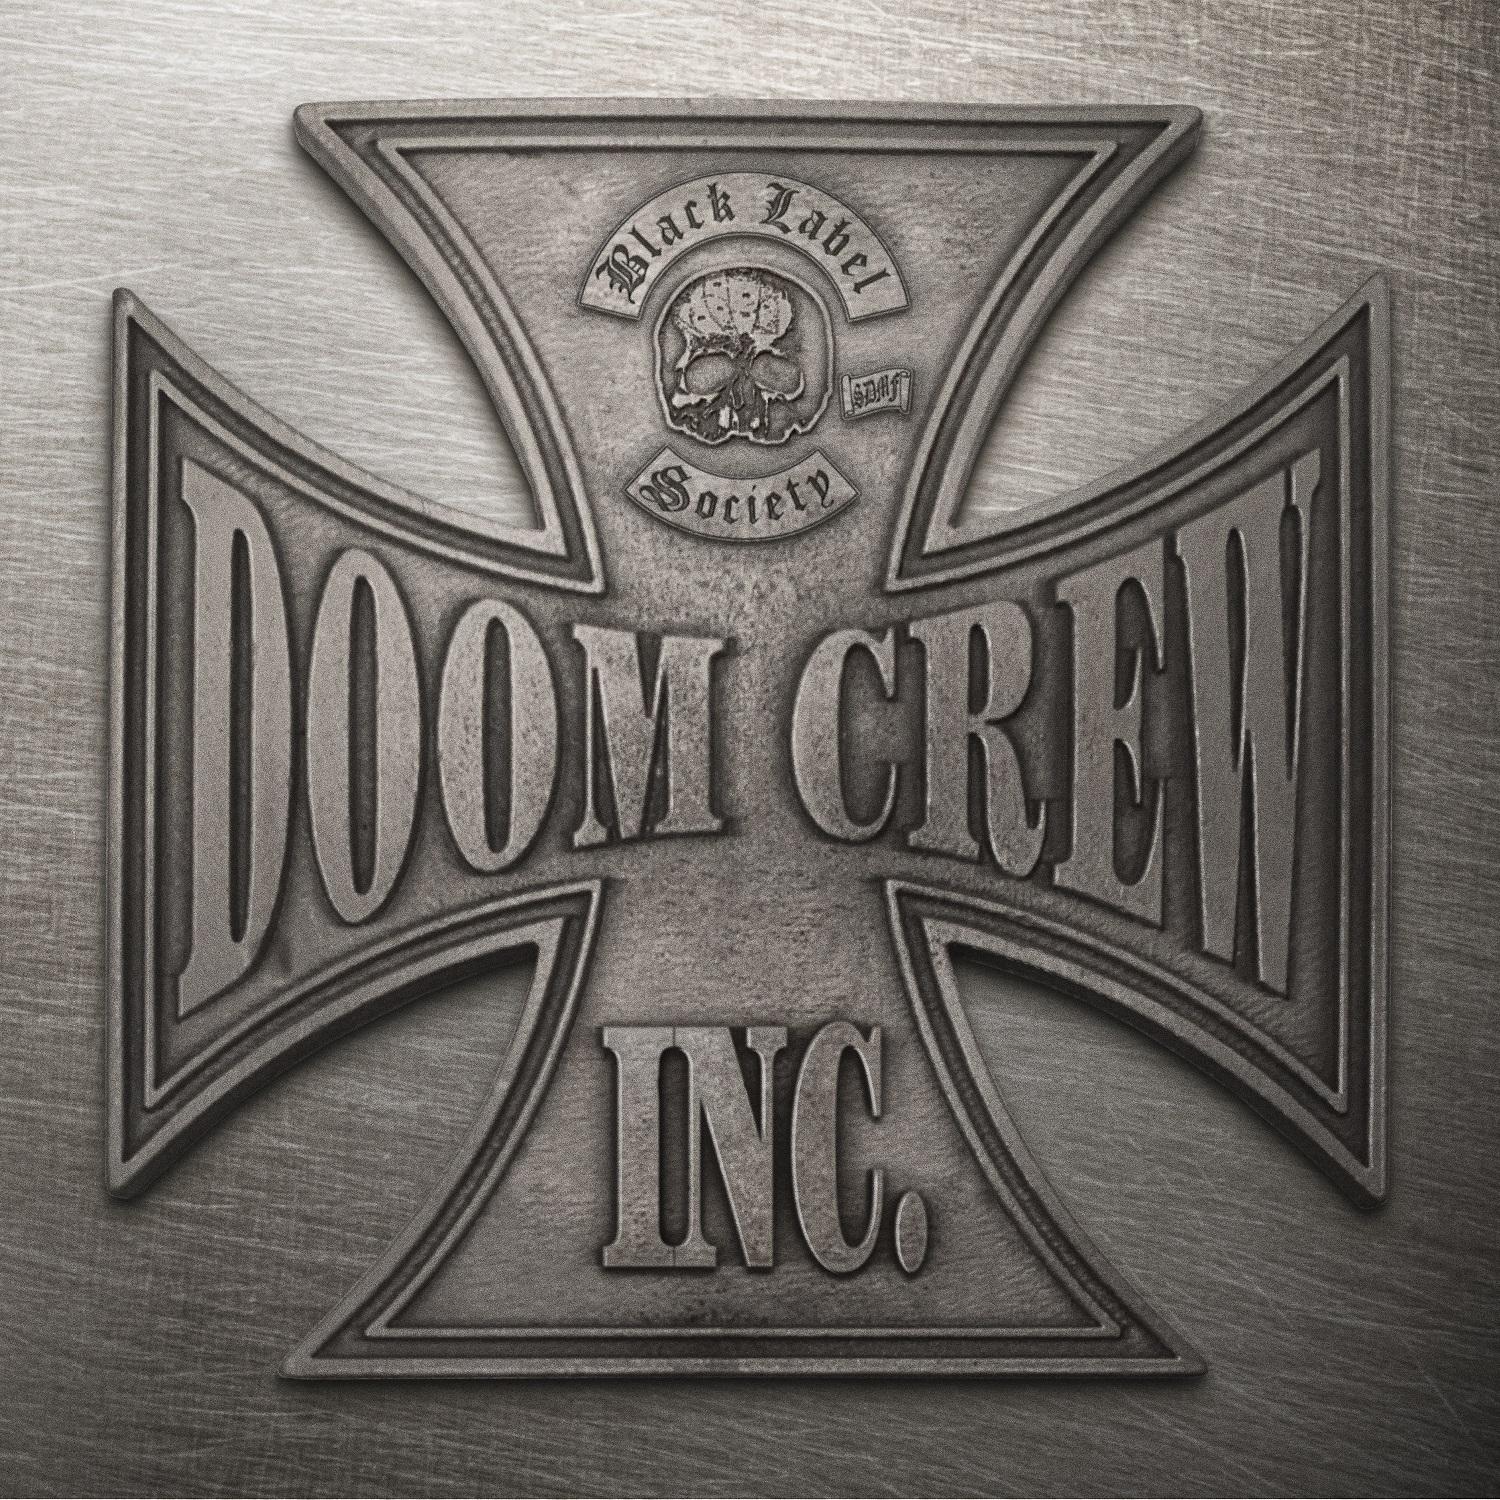 Black Label Society / Doom Crew Inc.